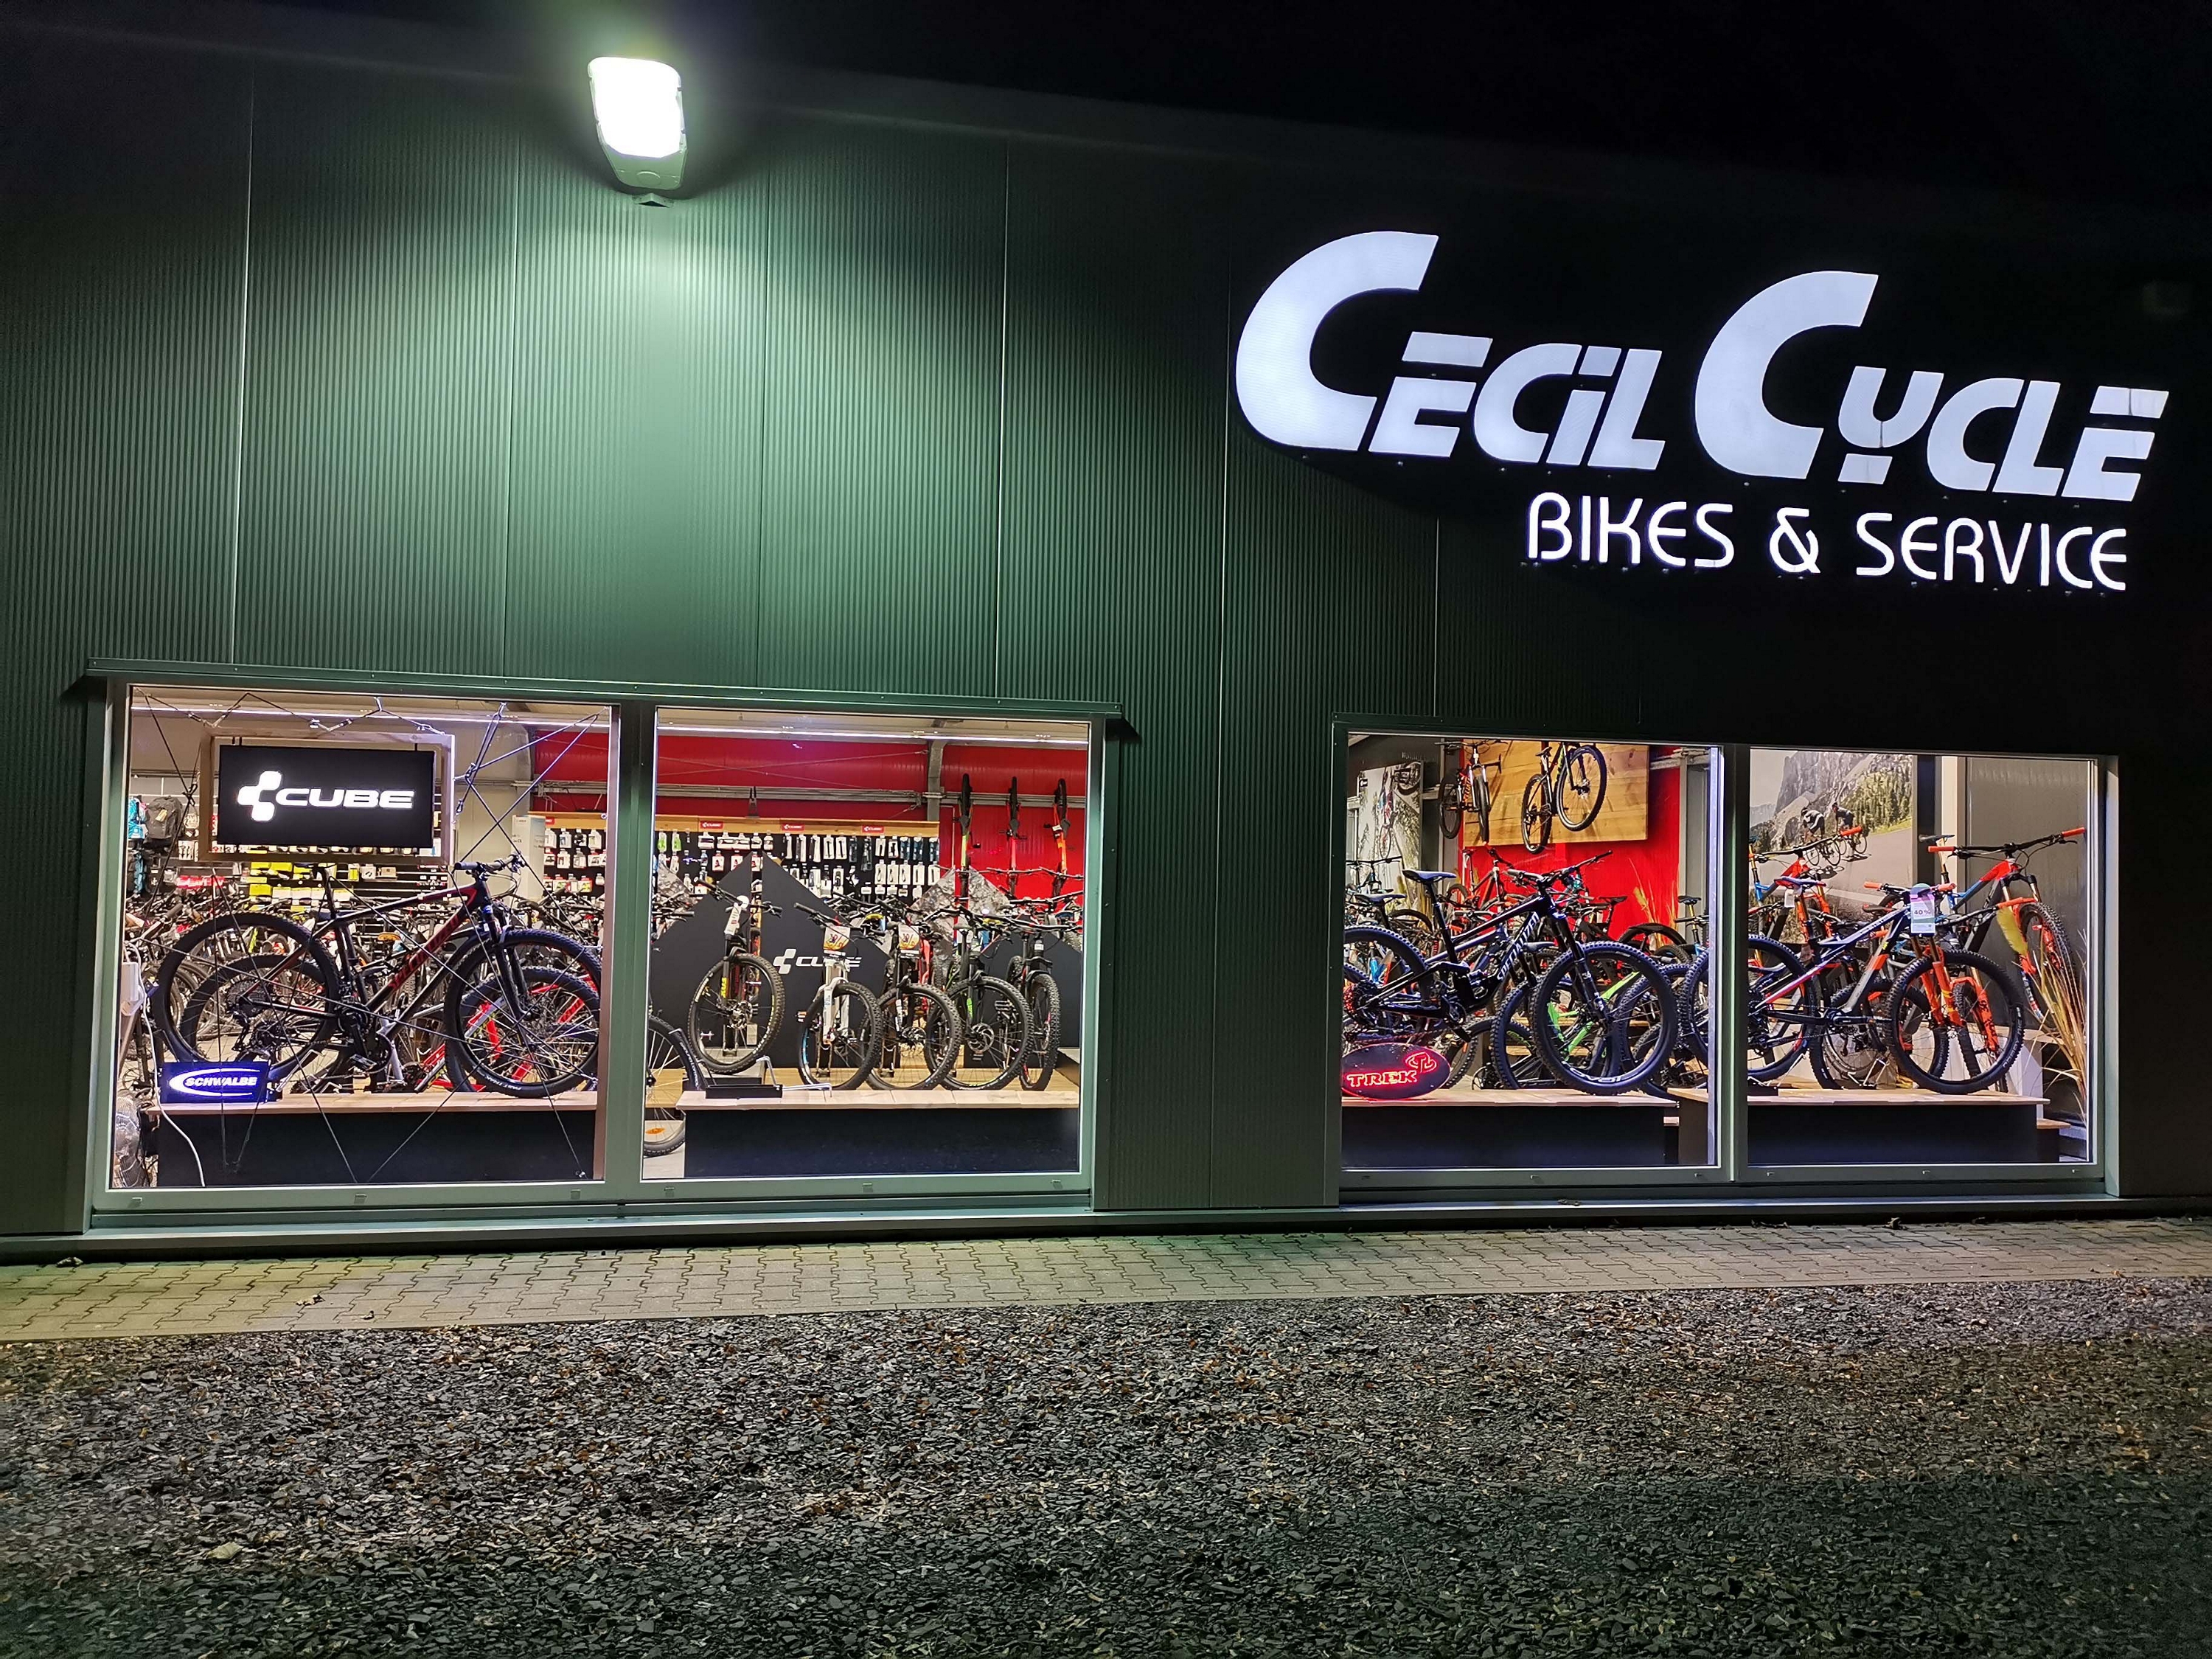 Cecil Cycle GmbH